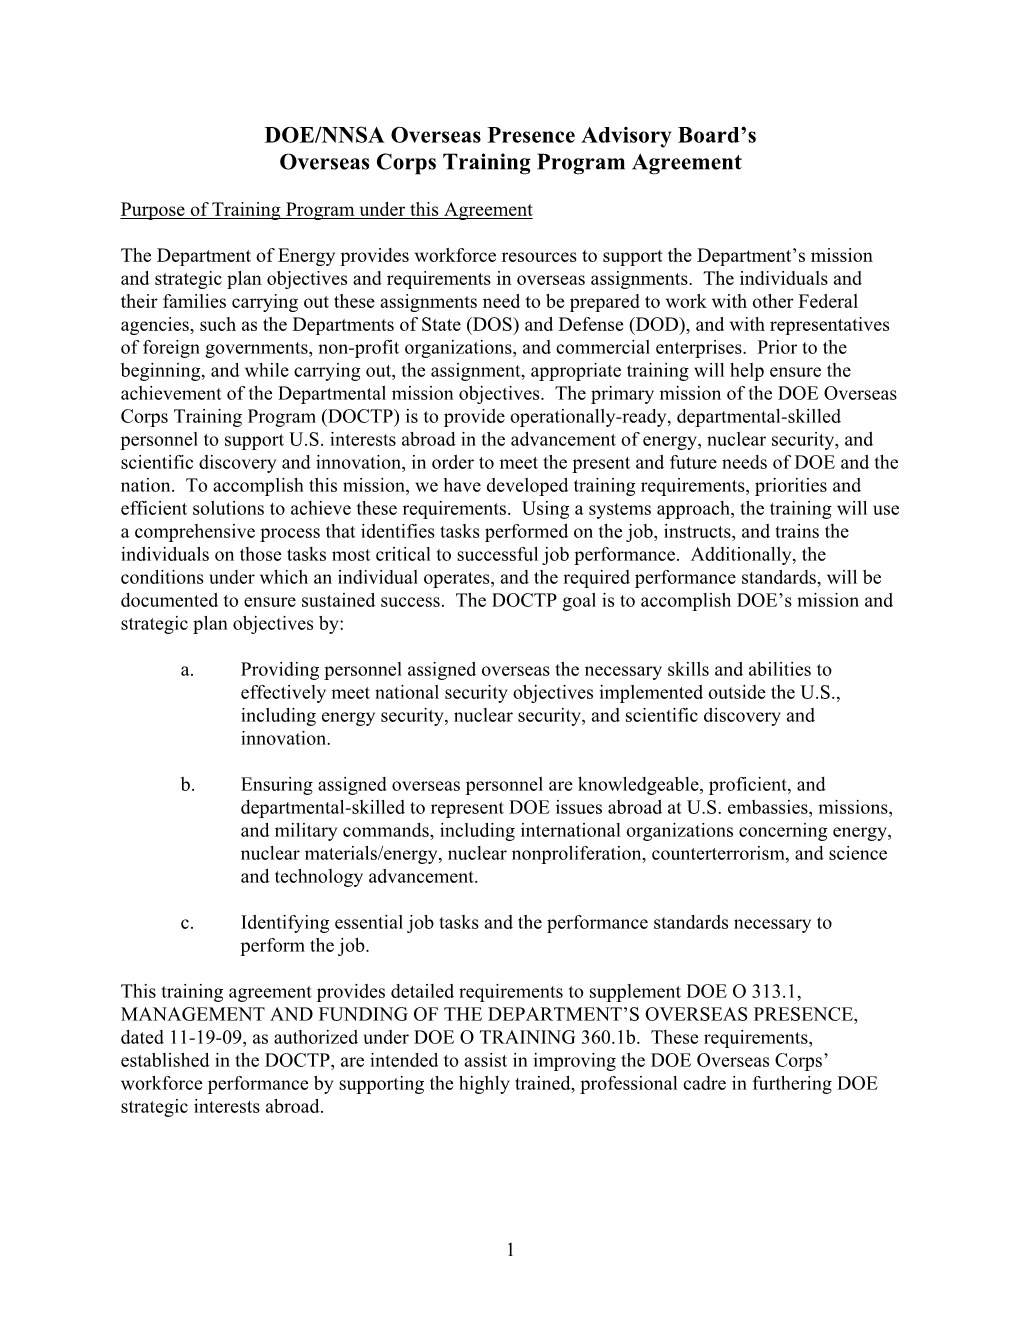 DOE/NNSA Overseas Presence Advisory Board's Overseas Corps Training Program Agreement